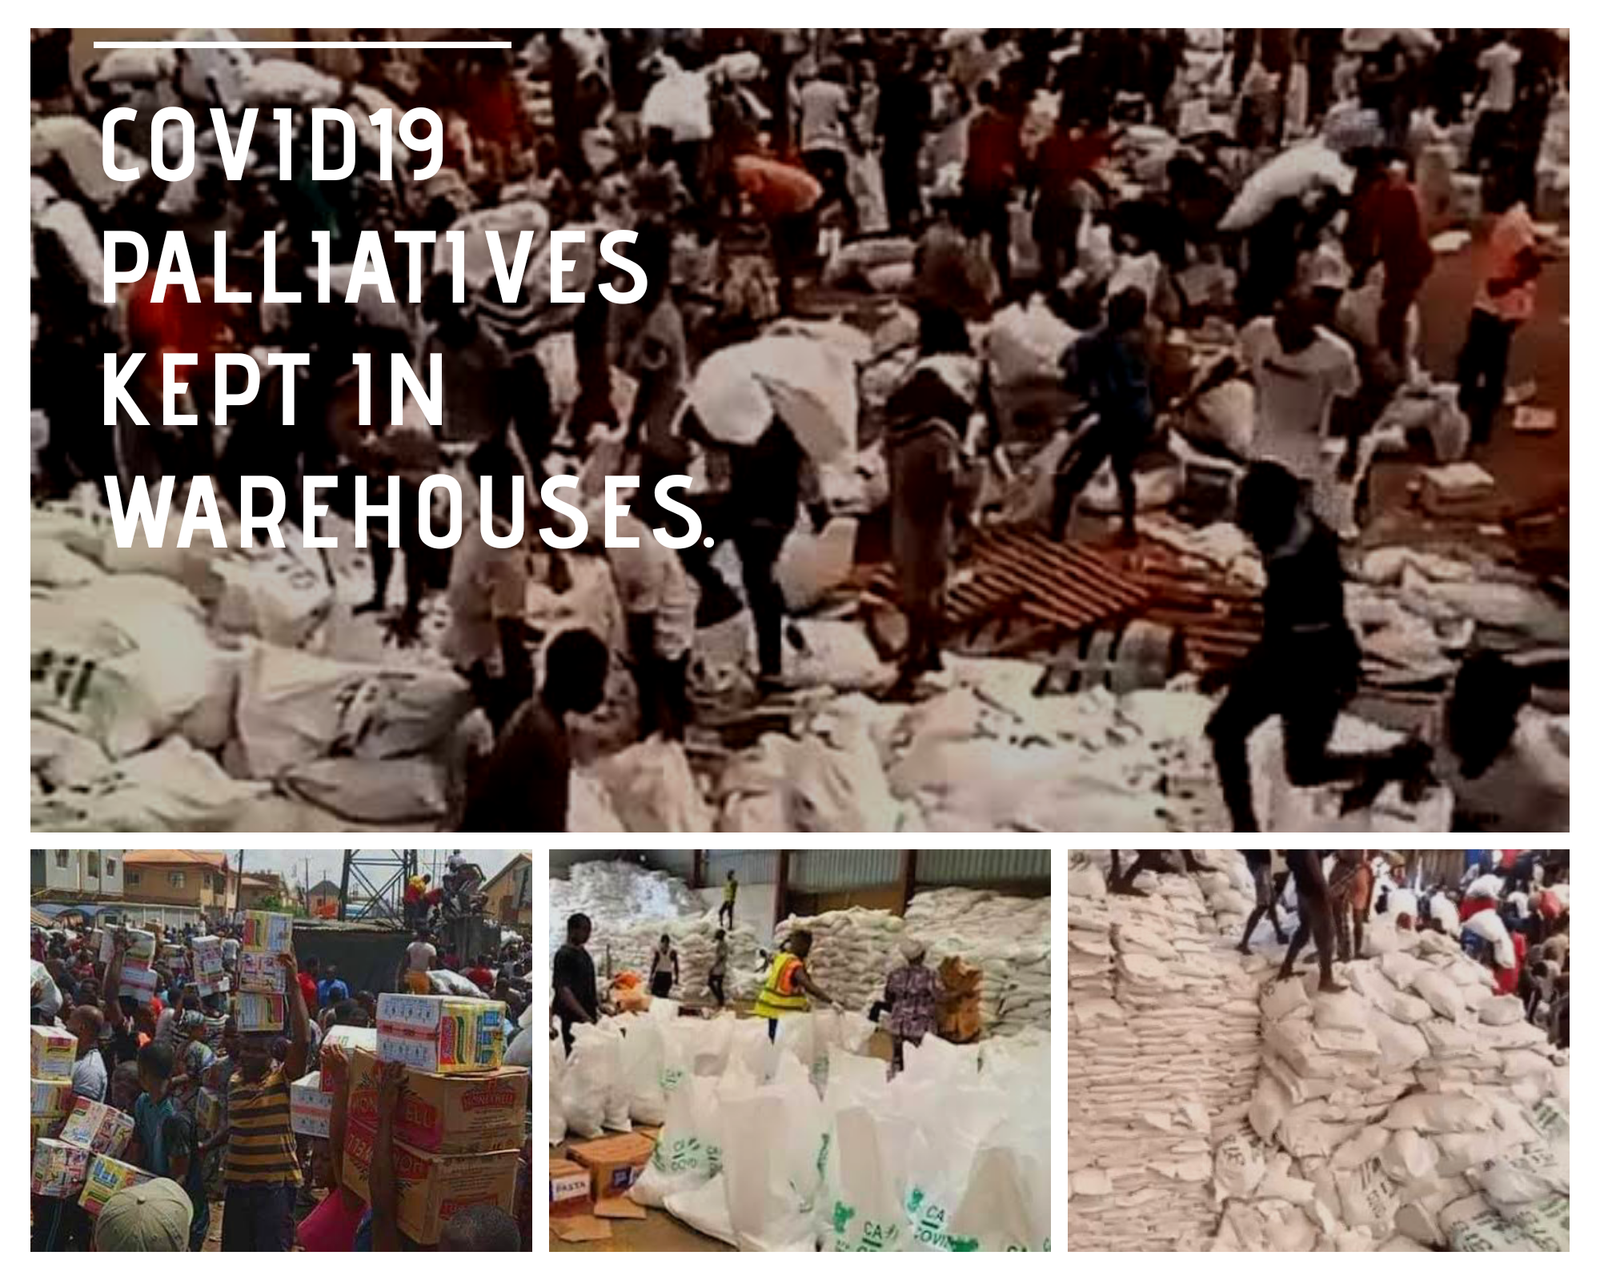 Covid19 palliatives kept in warehouses across Nigeria – VIEWERS CORNER NEWS  ™